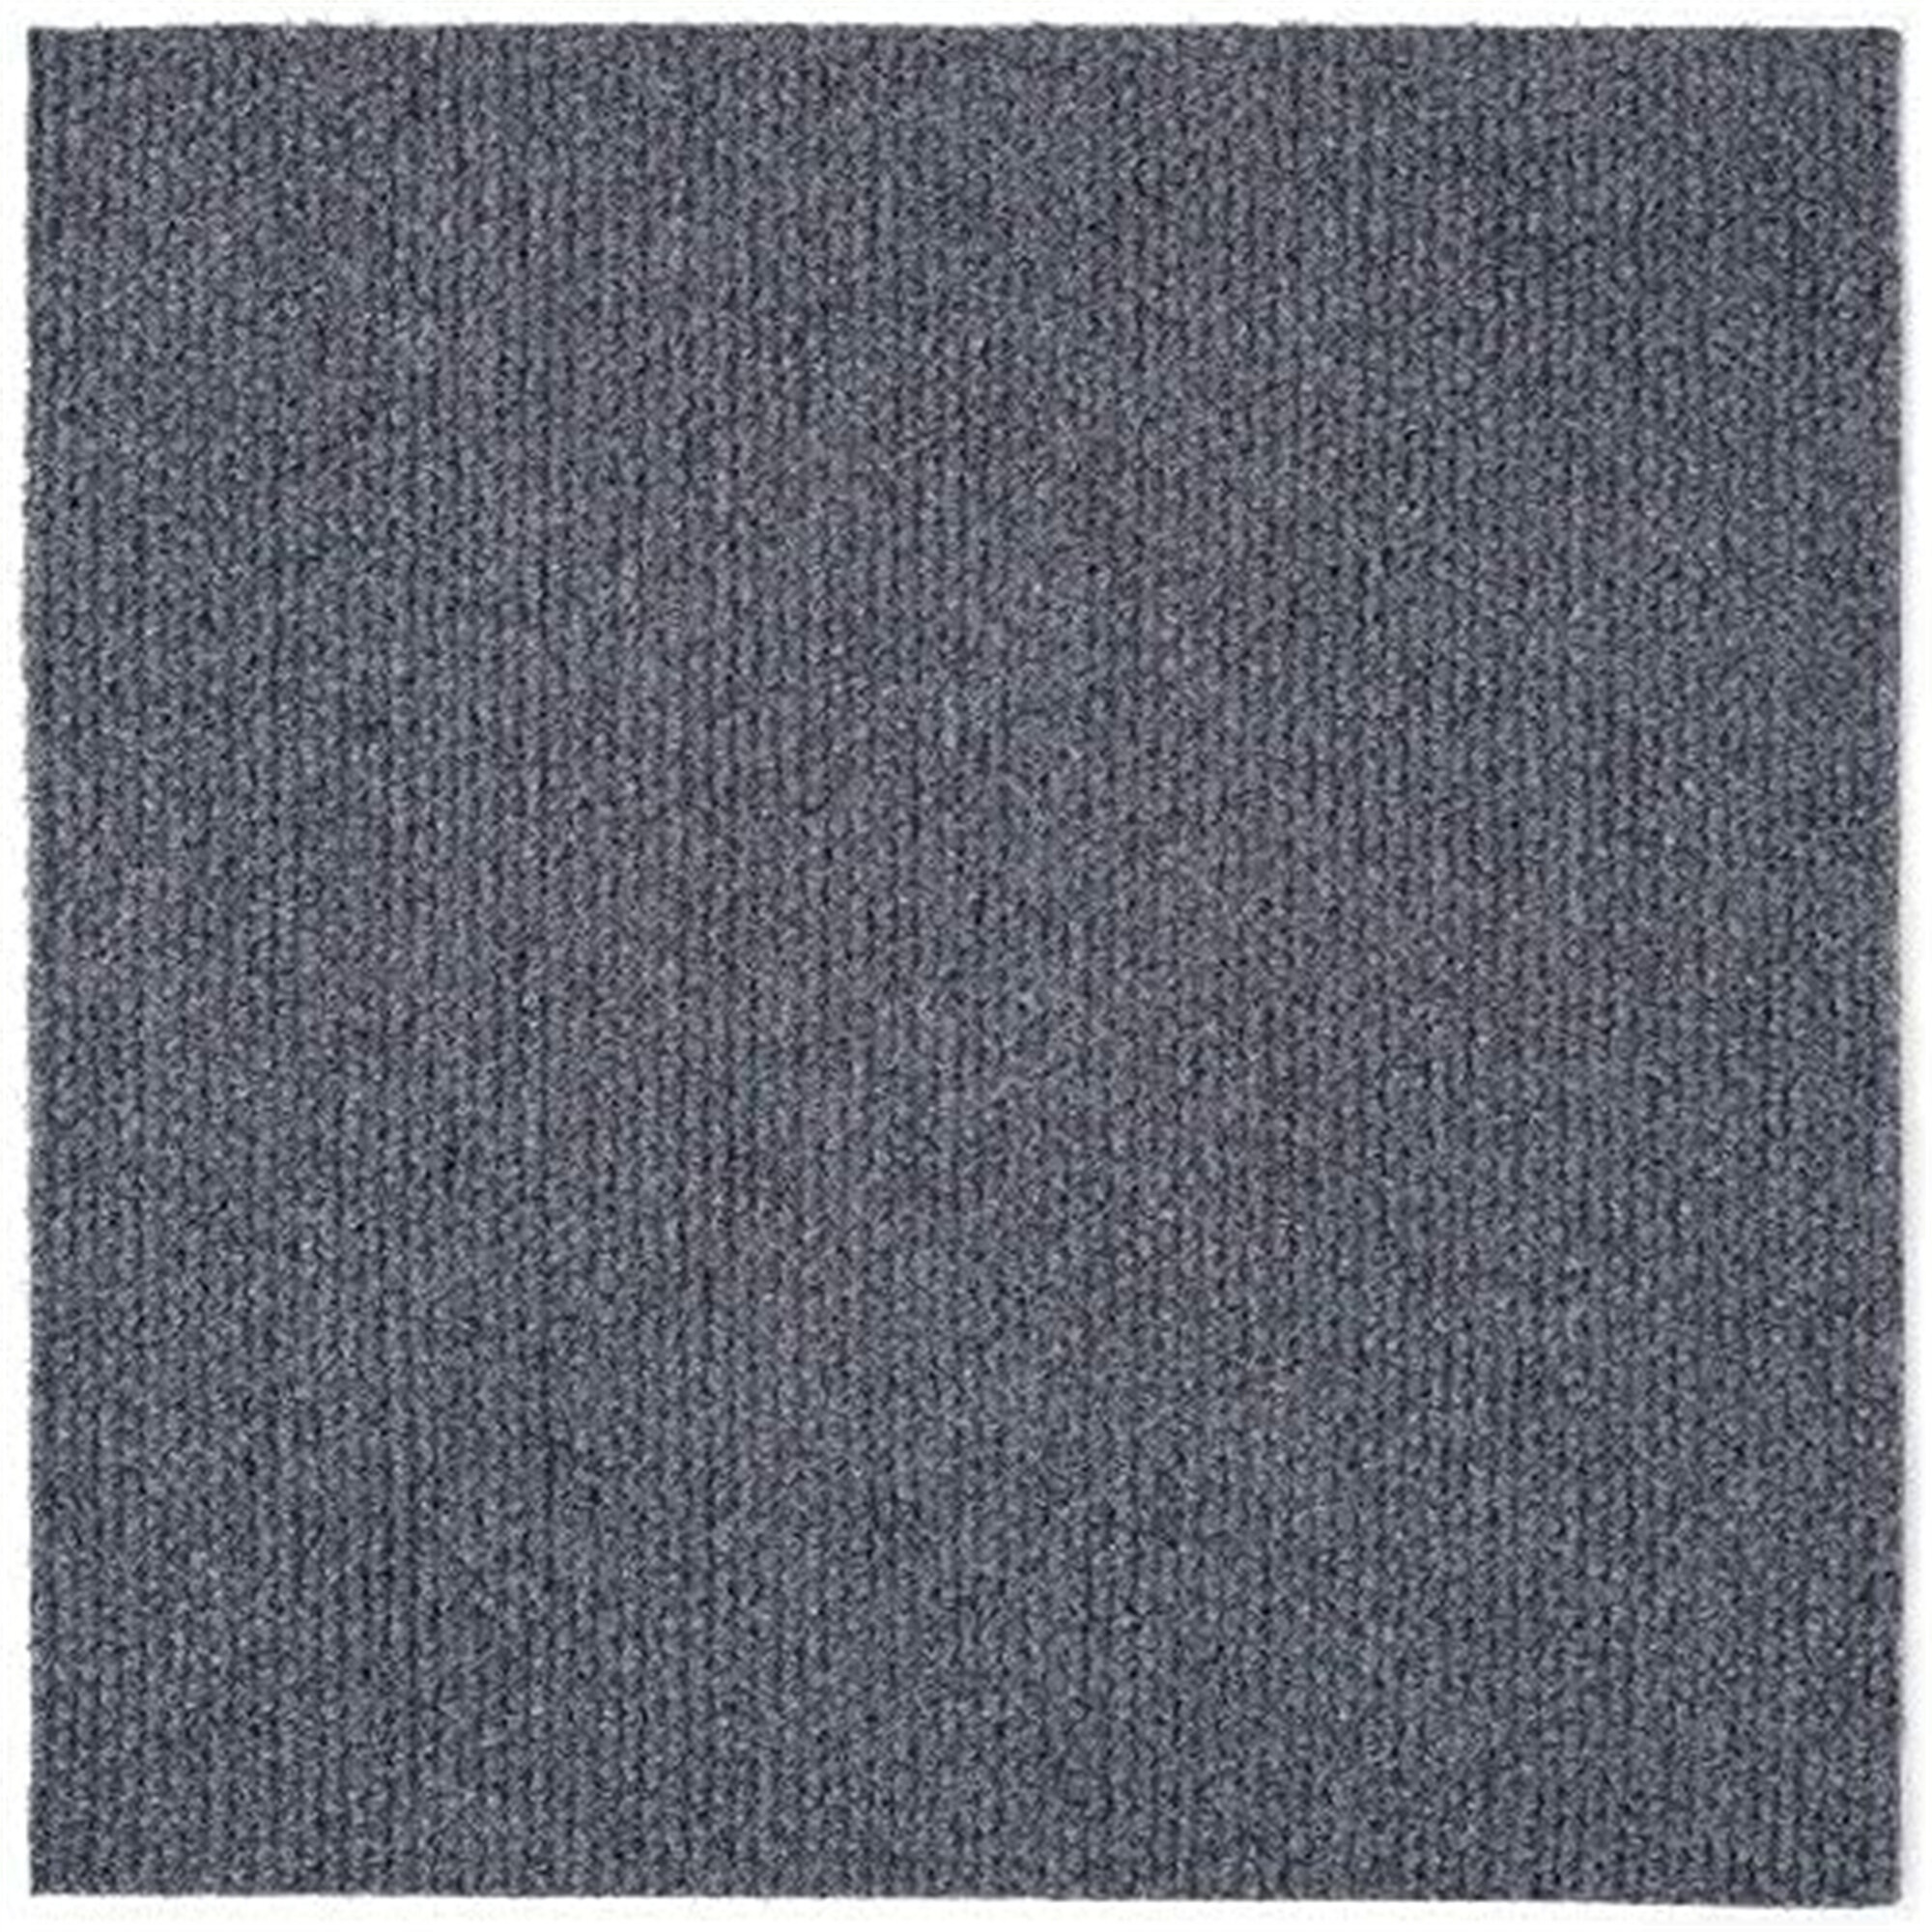 Carpet Tile Floor Mat 12x12'' Squares Peel And Stick Adhesive Outdoor Indoor